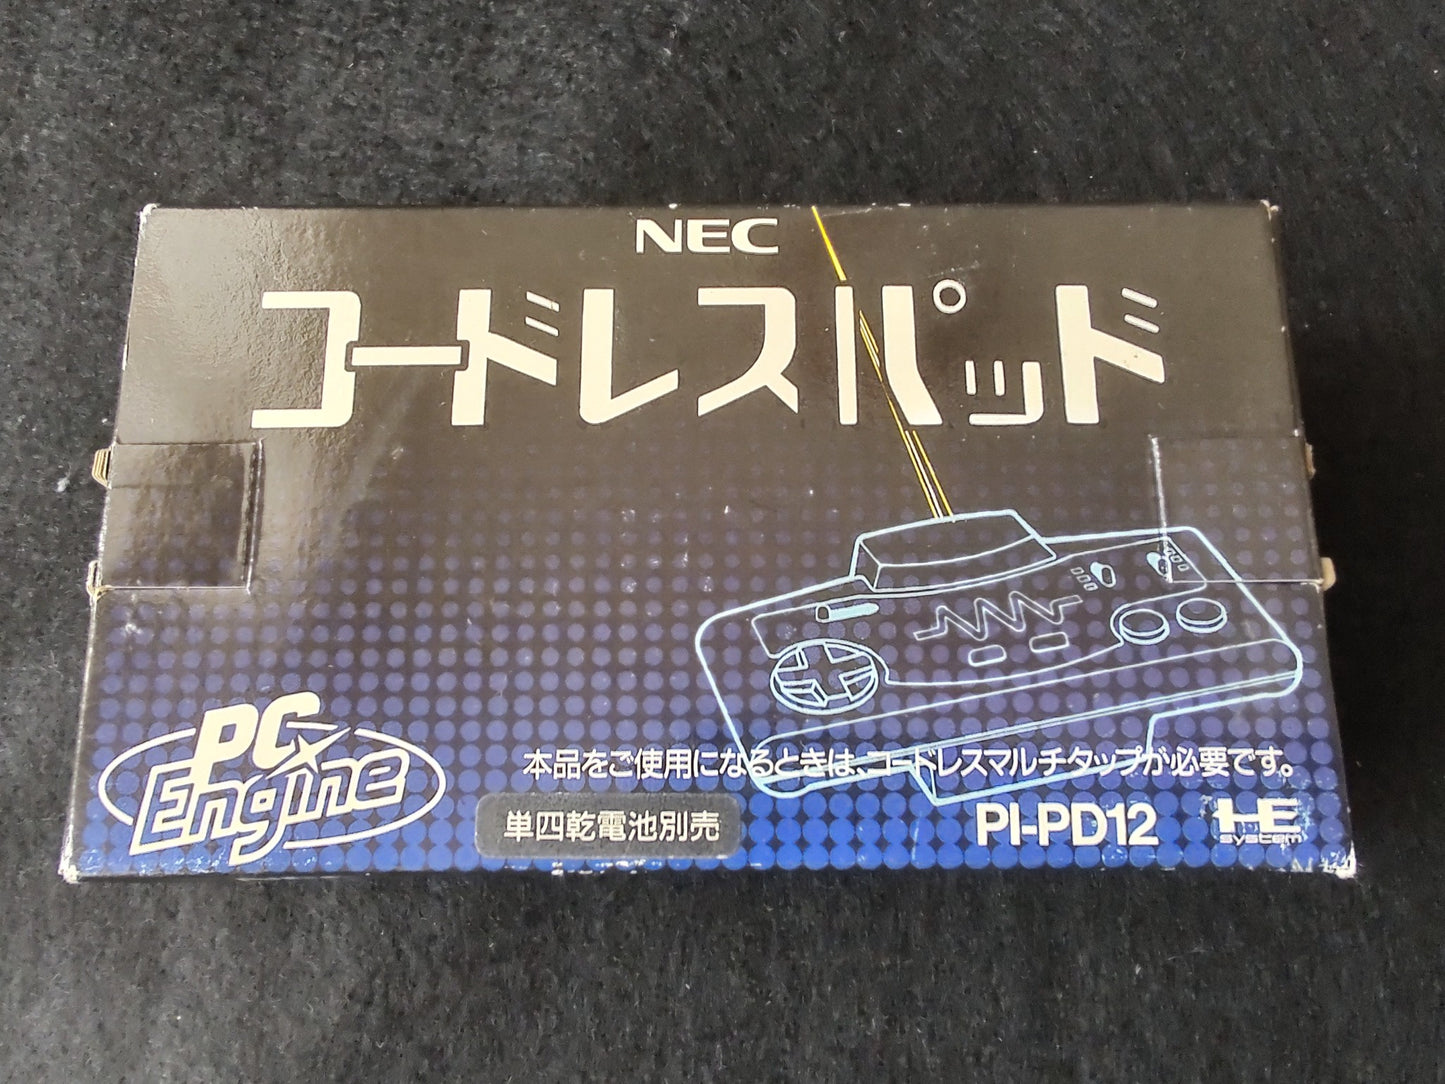 Defective, NEC PC Engine Cordless Pad(PI-PD12) w/Box set-f0504-1